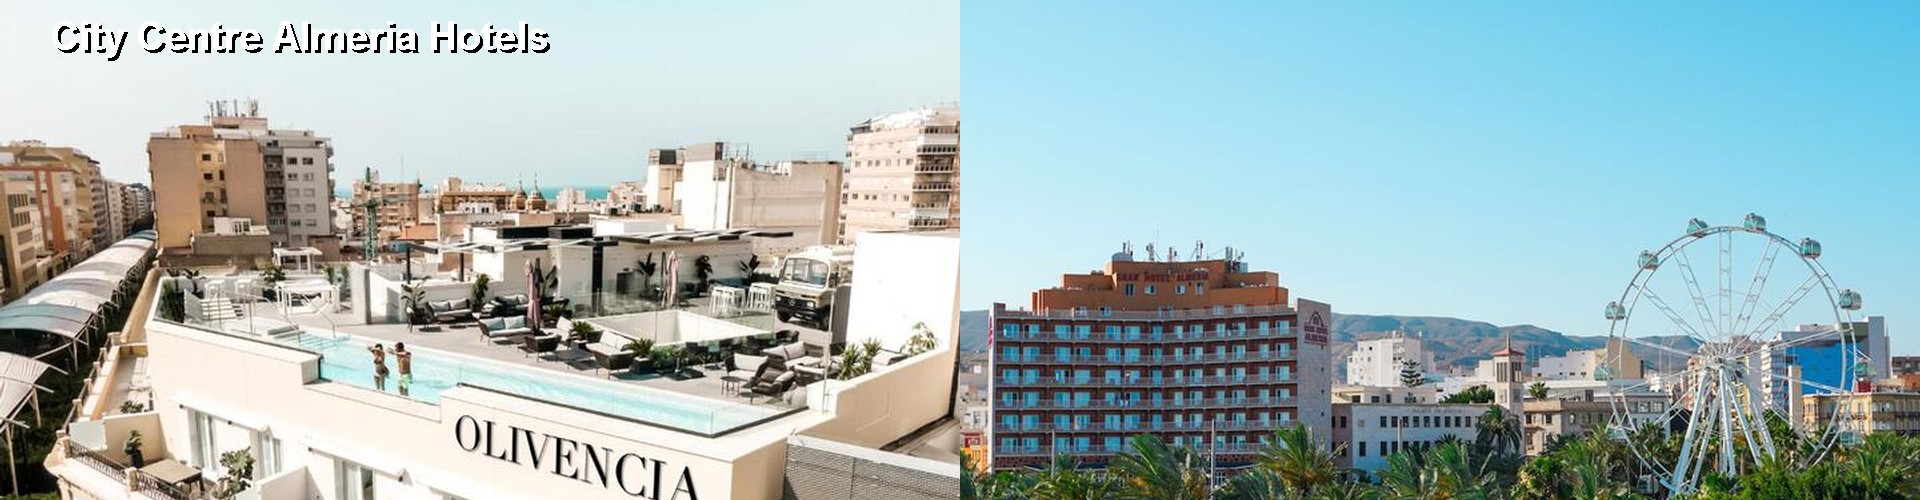 5 Best Hotels near City Centre Almeria